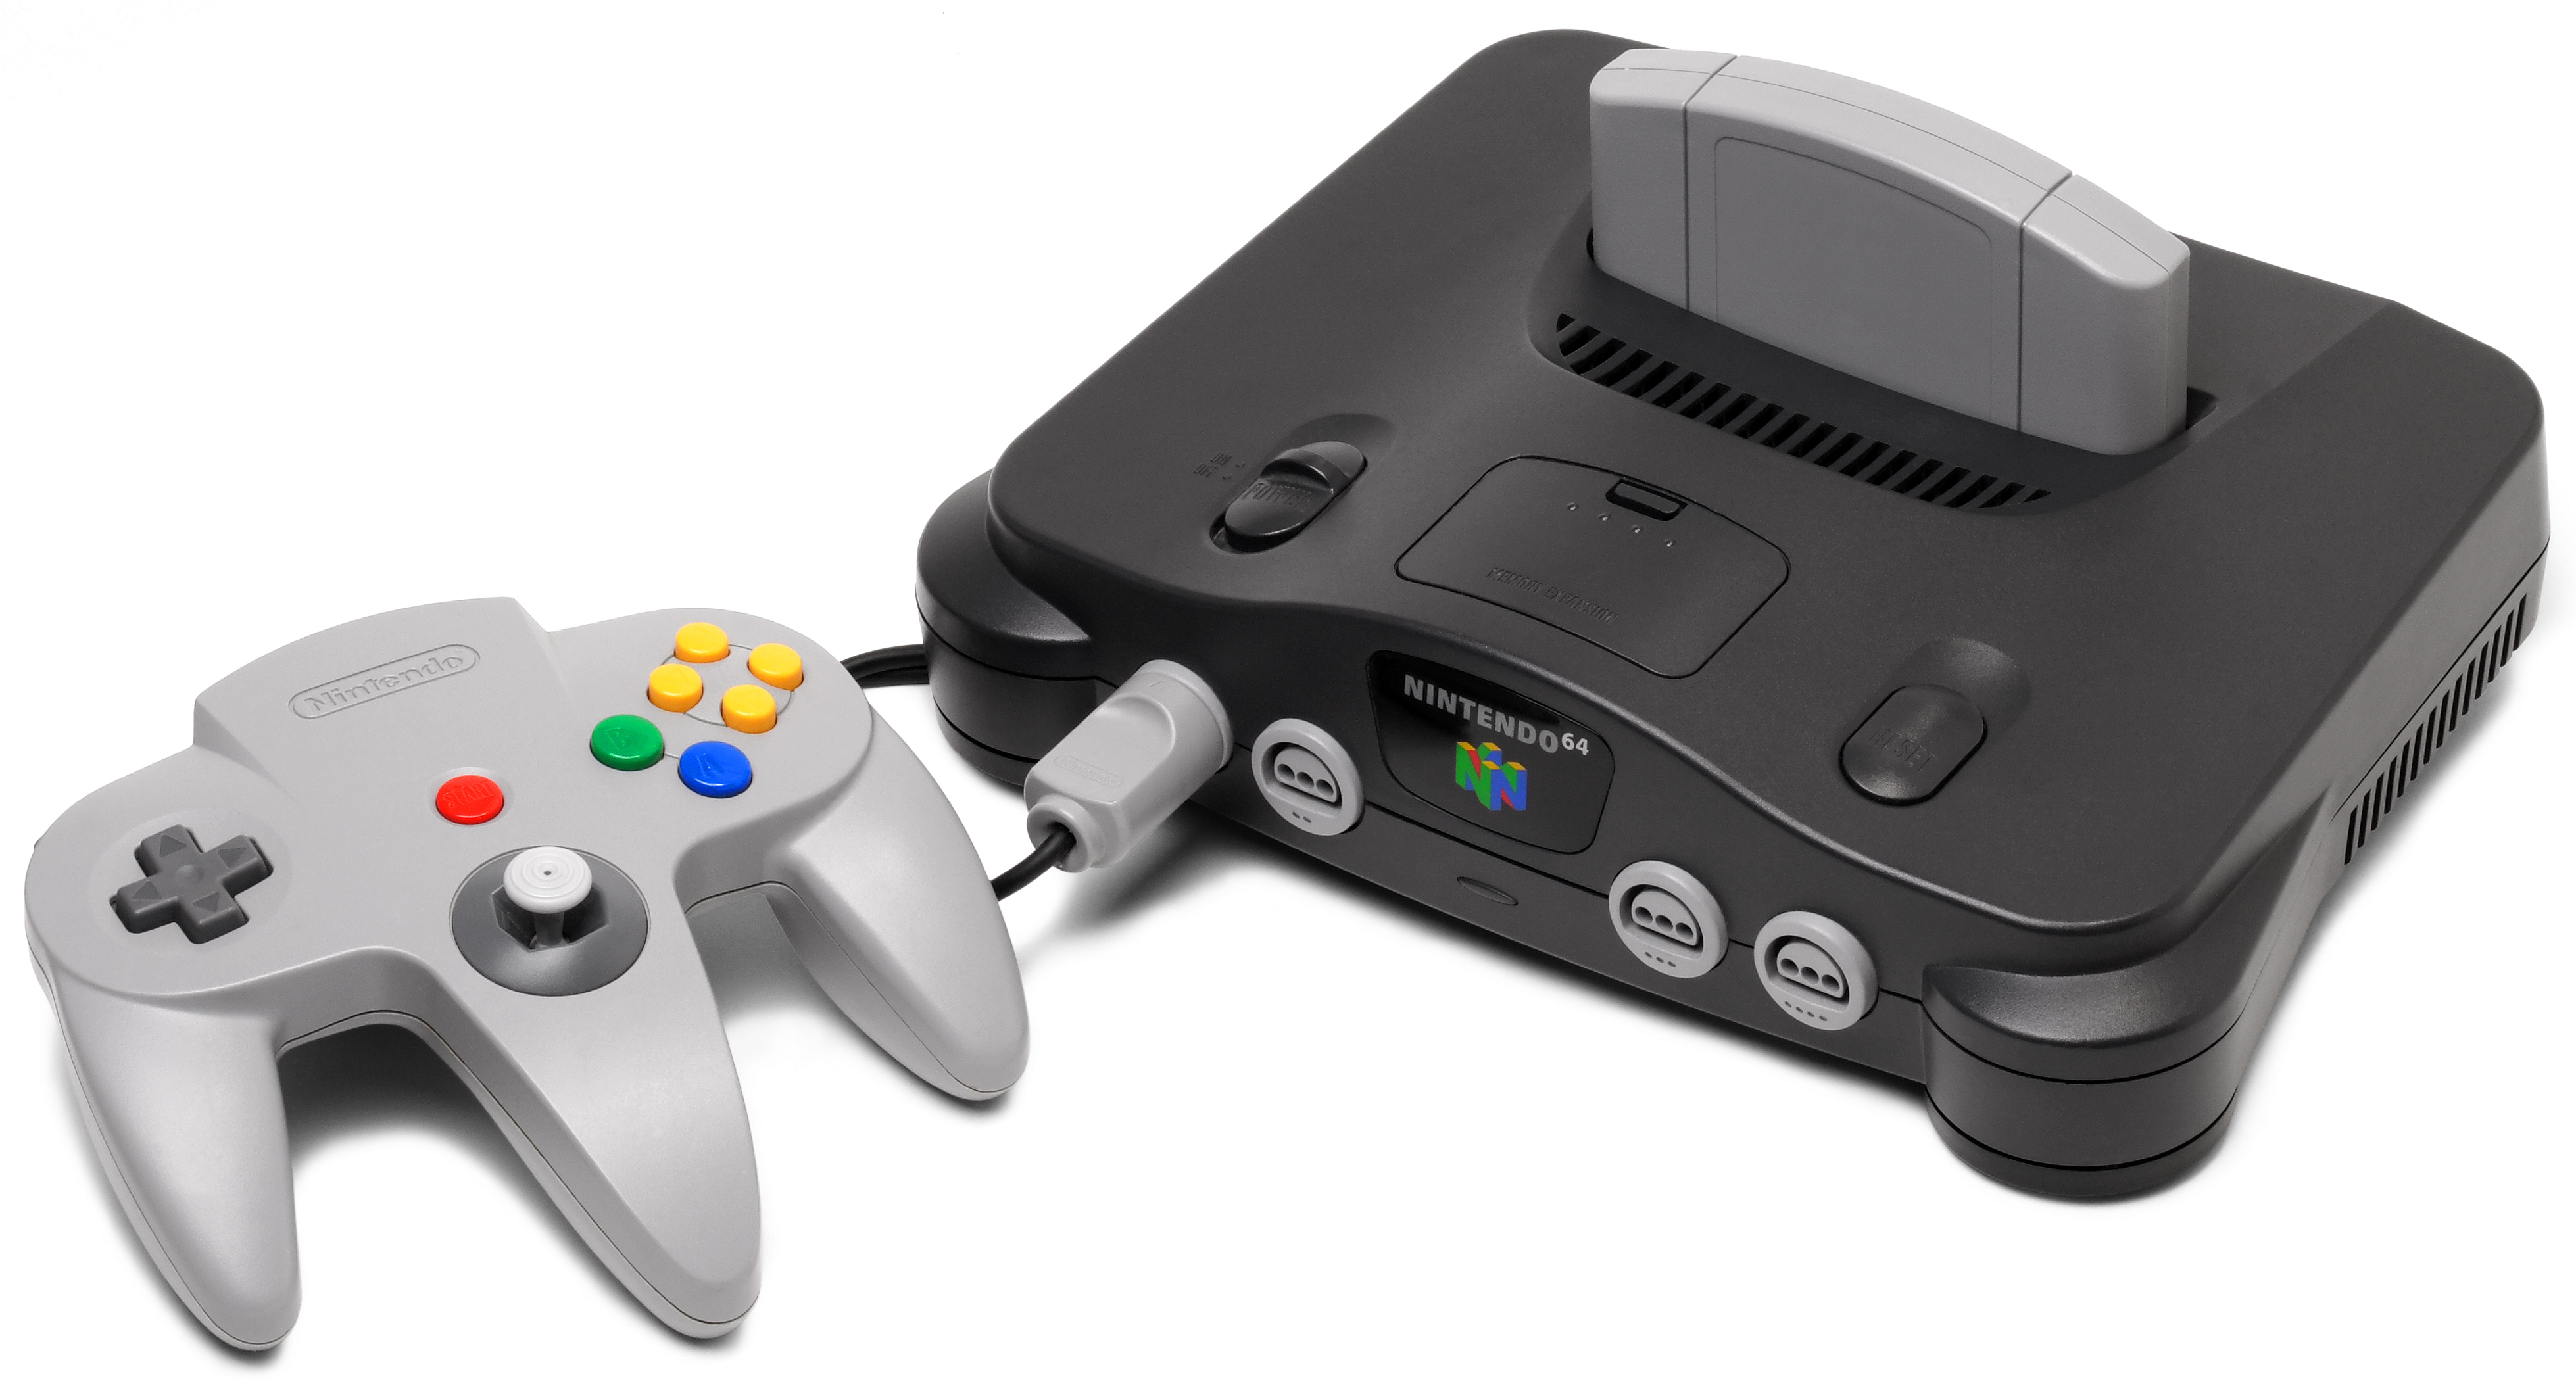 Nintendo 64 - Initial version